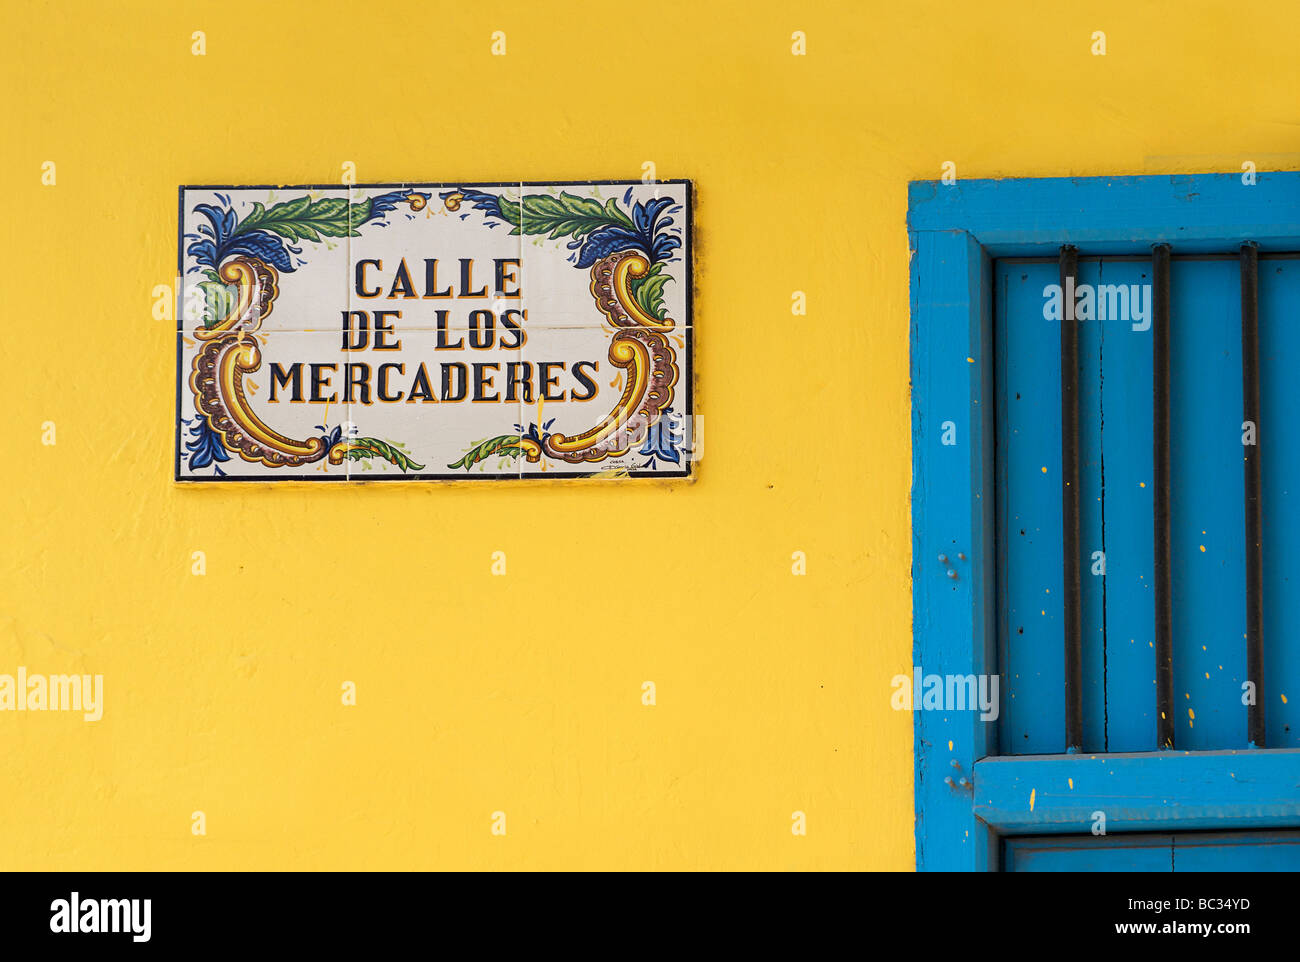 CALLE DE LOS MERCADERES, street sign, Old Havana, Cuba Stock Photo